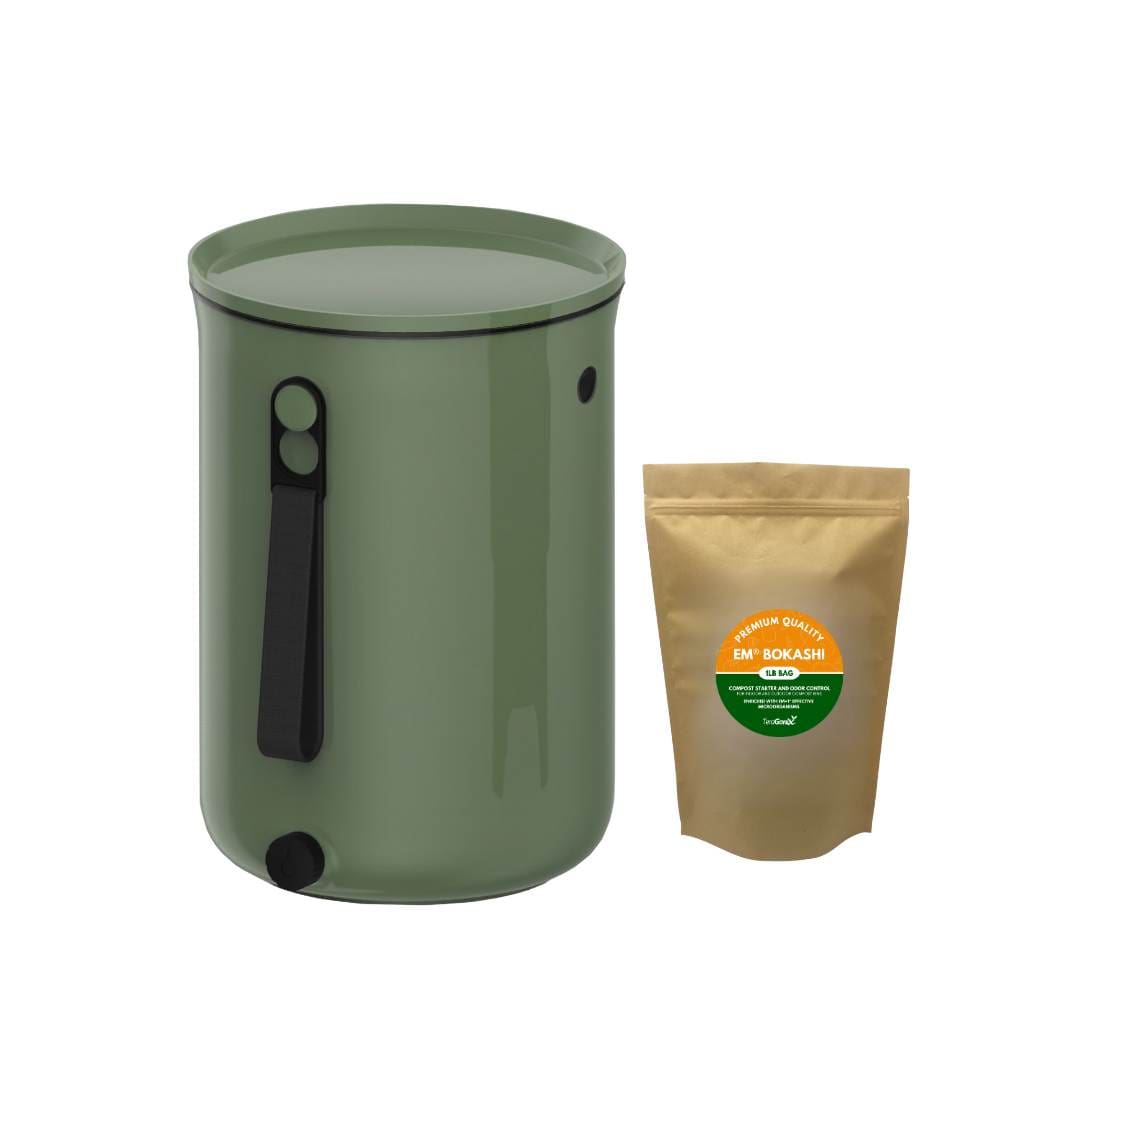 TeraGanix Bokashi Compost Bin Single Bucket + 1 lb bag of EM Bokashi / Olive Bokashi Kitchen Compost Bin, 2.5 gal